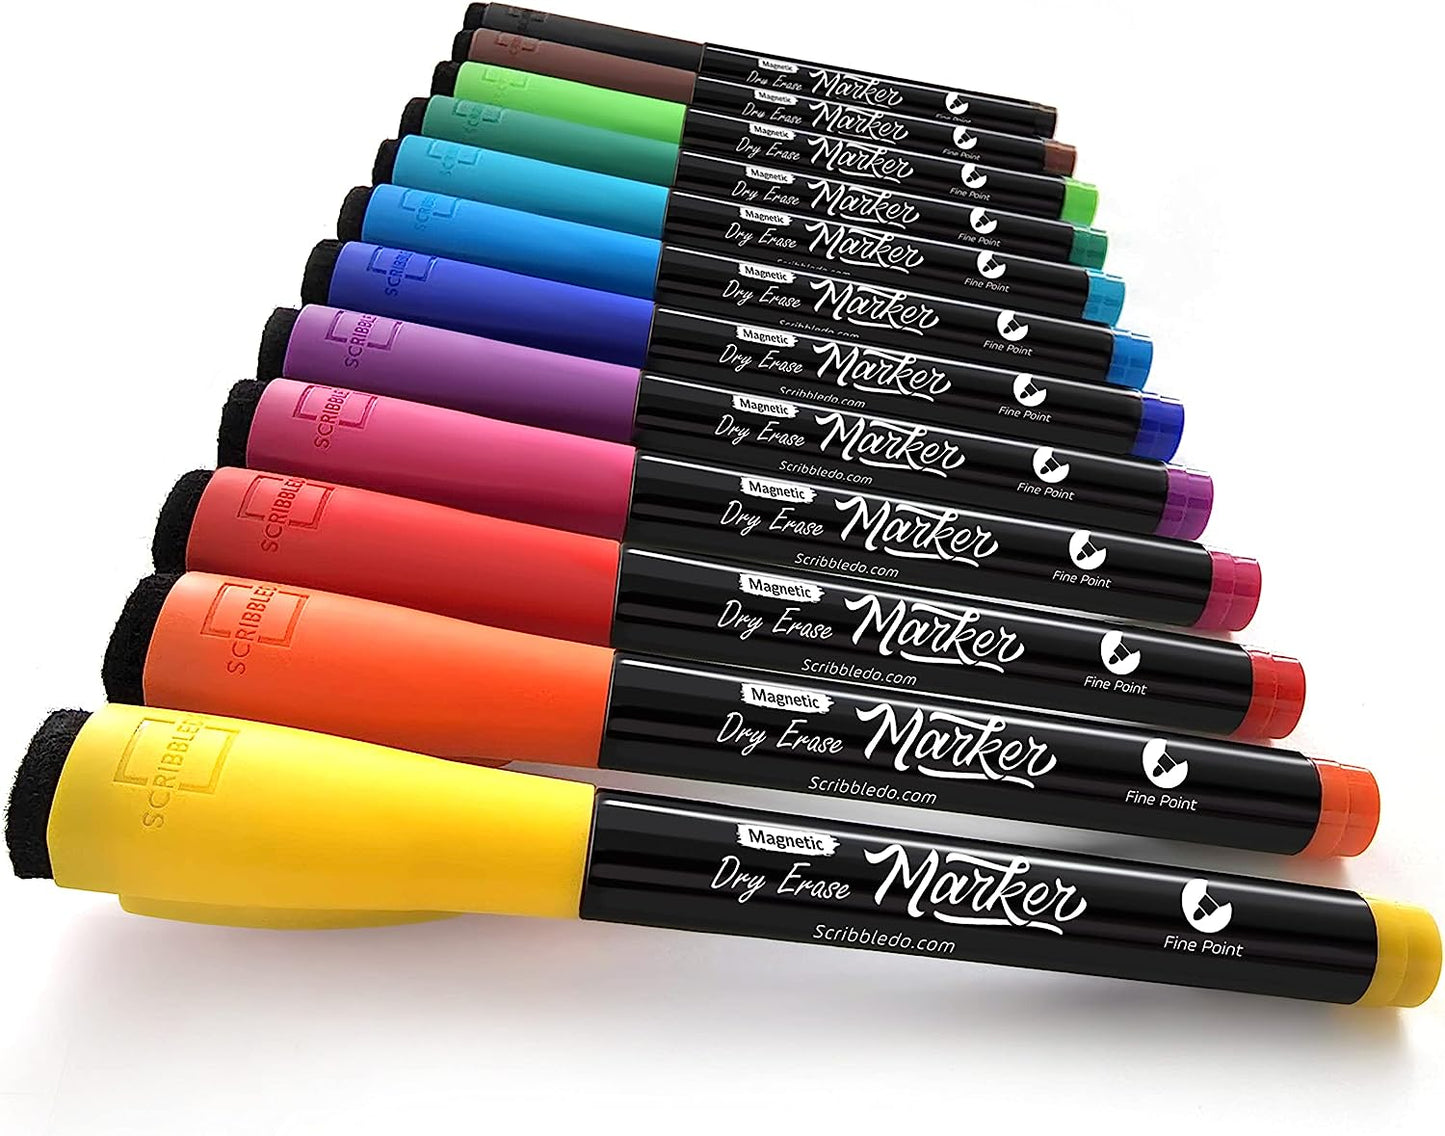 12 pack Magnetic Fine Tip Dry Erase Color Markers